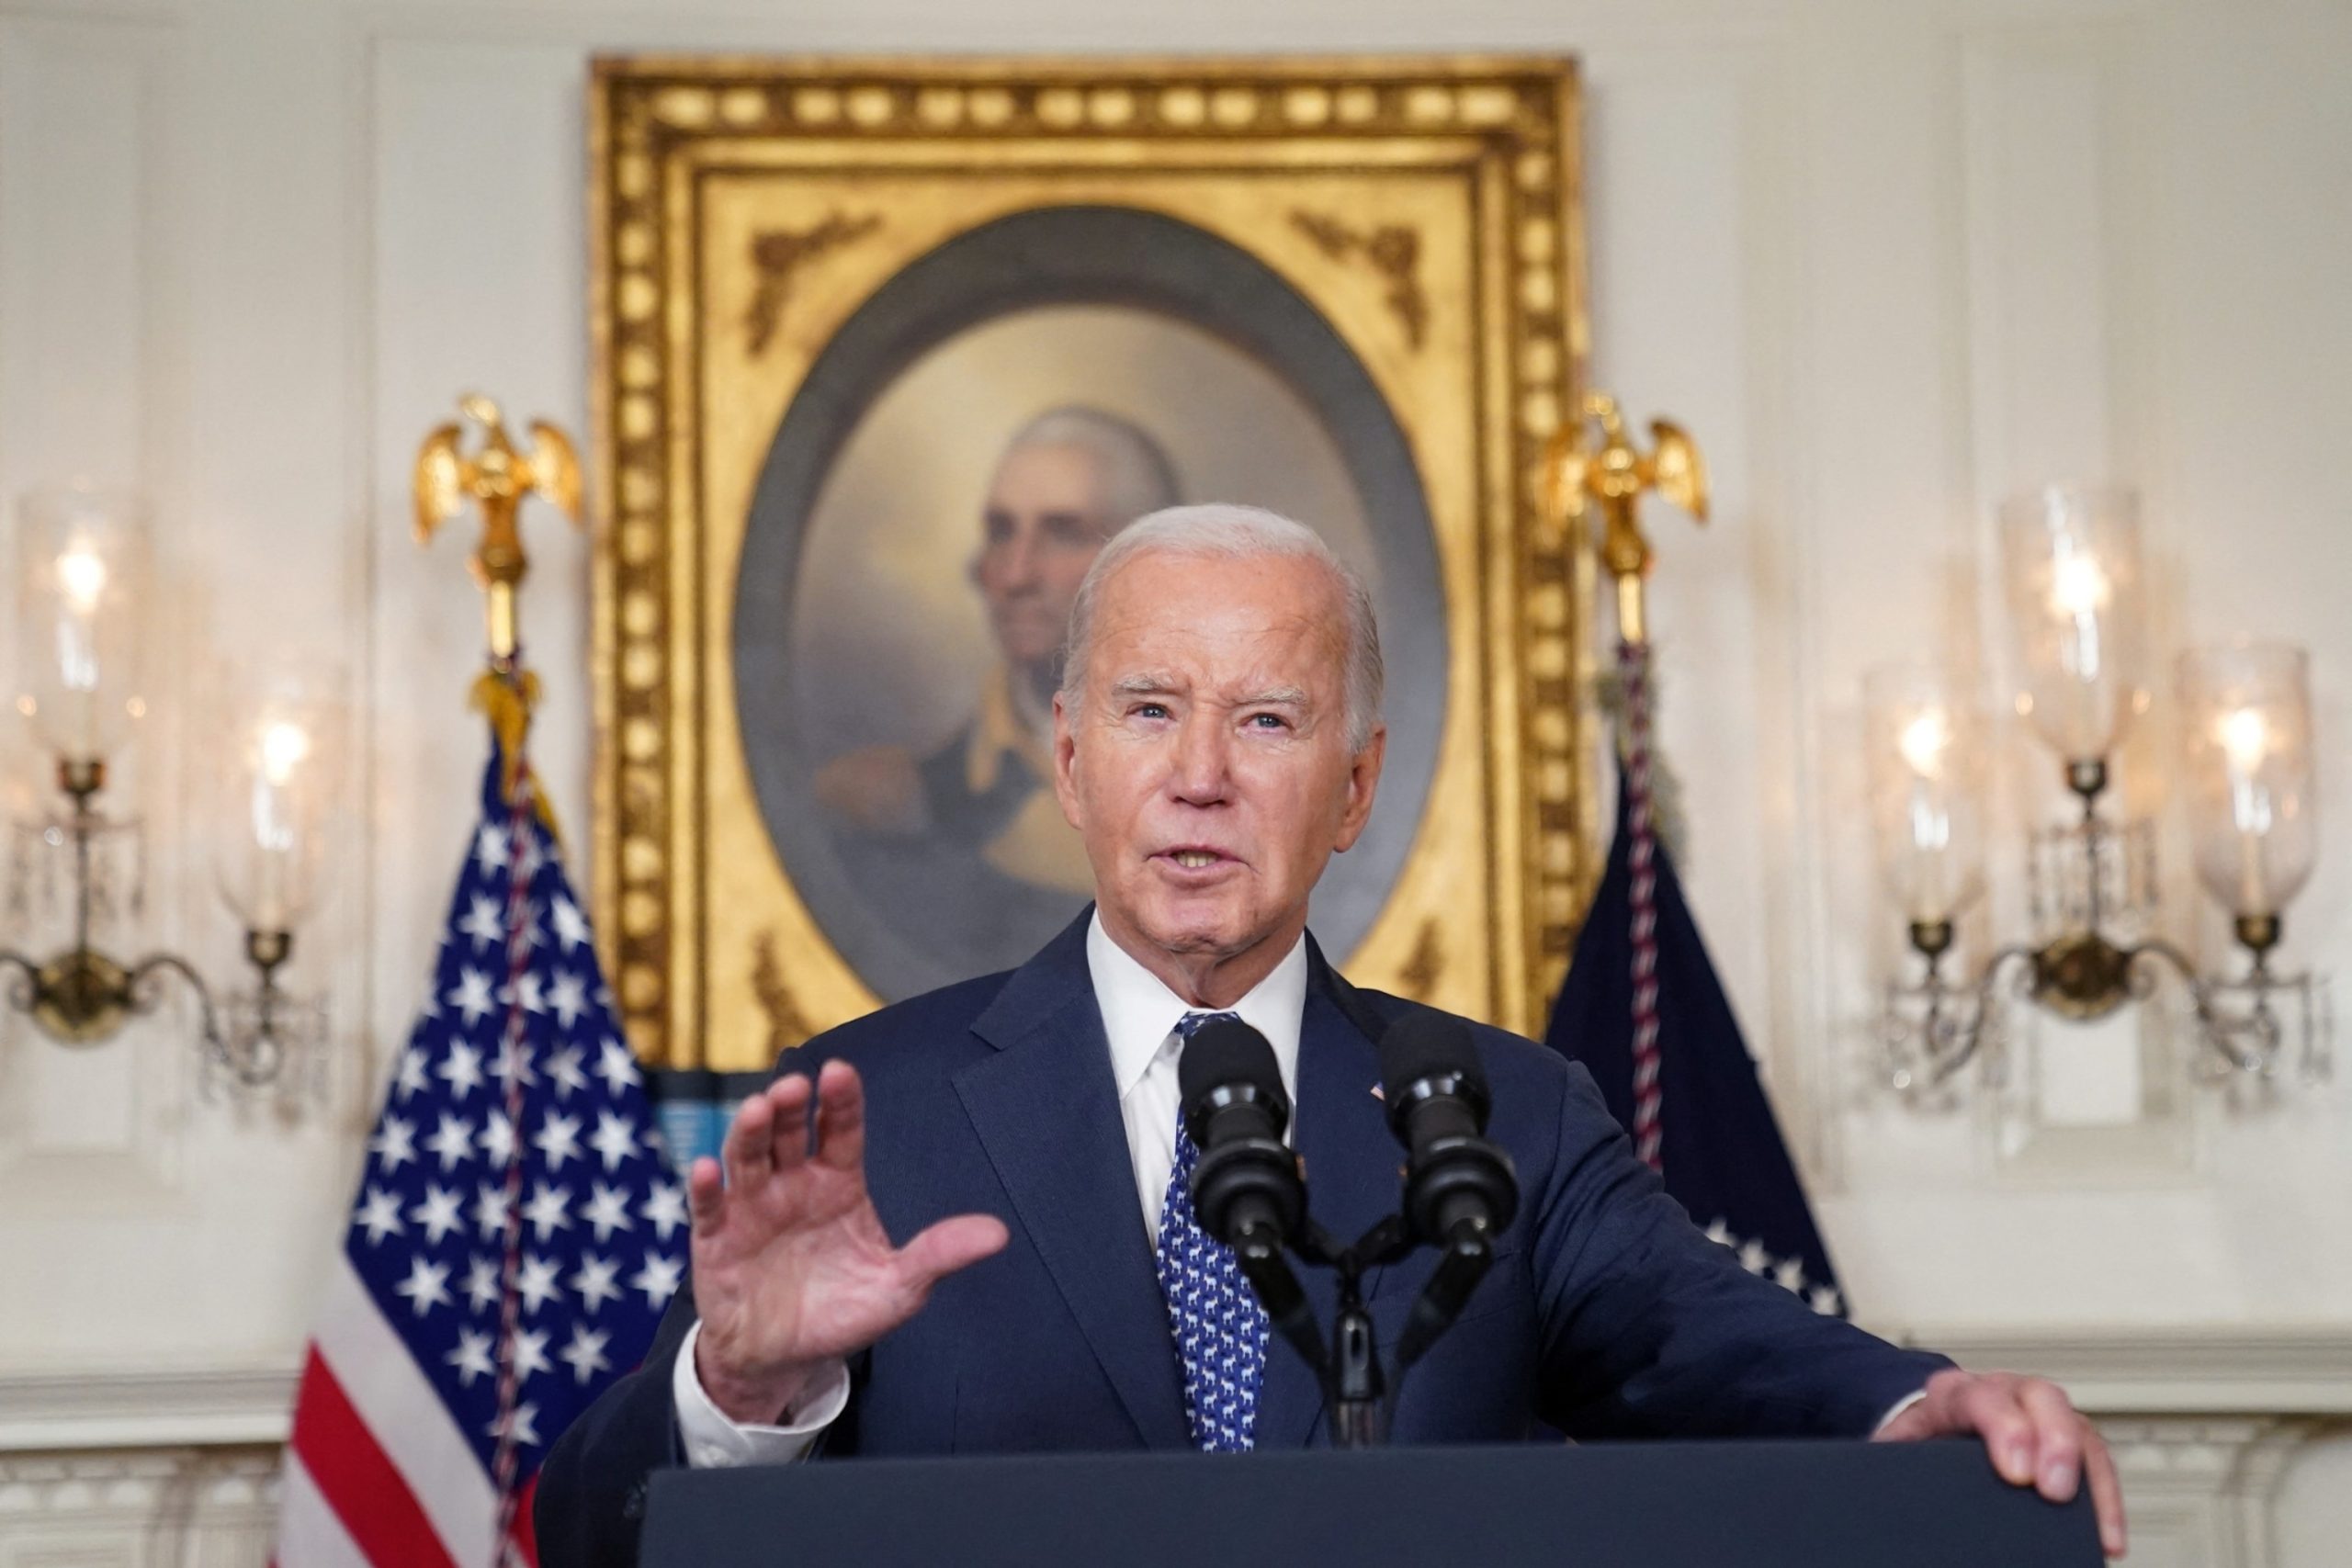 President Biden responds to special counsel's remarks regarding his memory